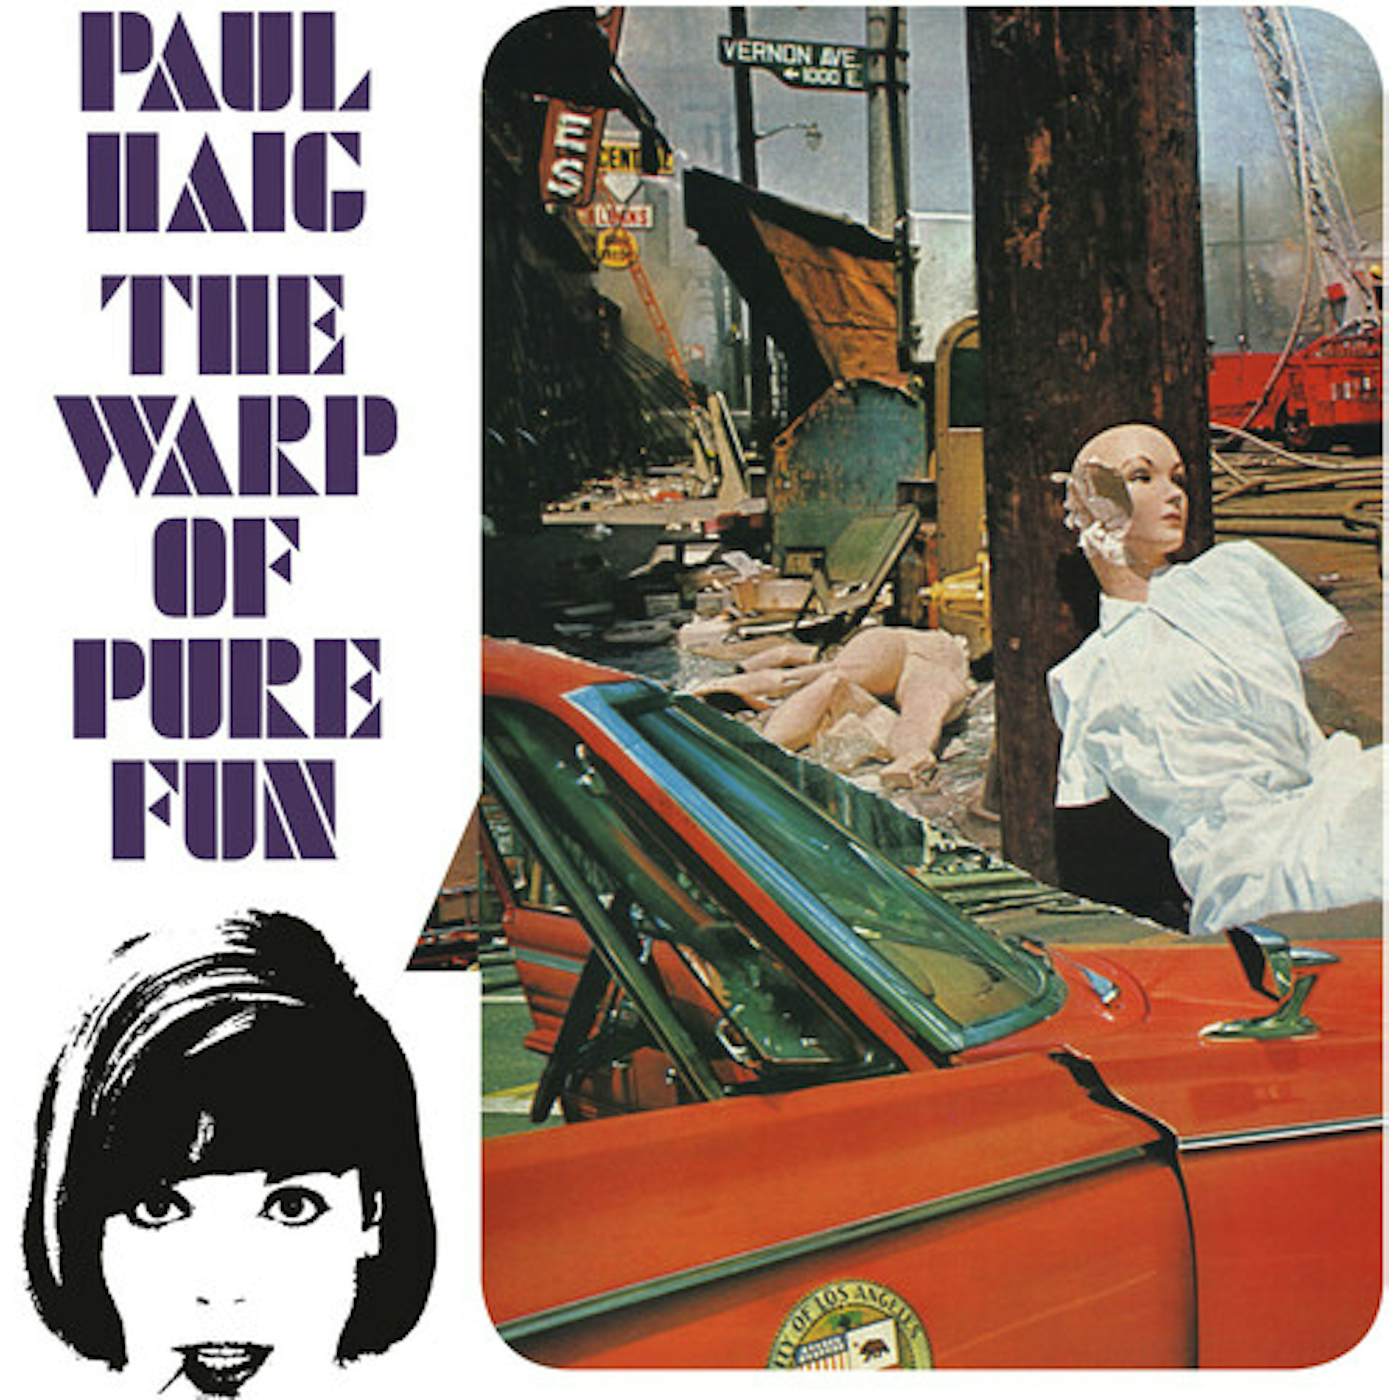 Paul Haig WARP OF PURE FUN CD